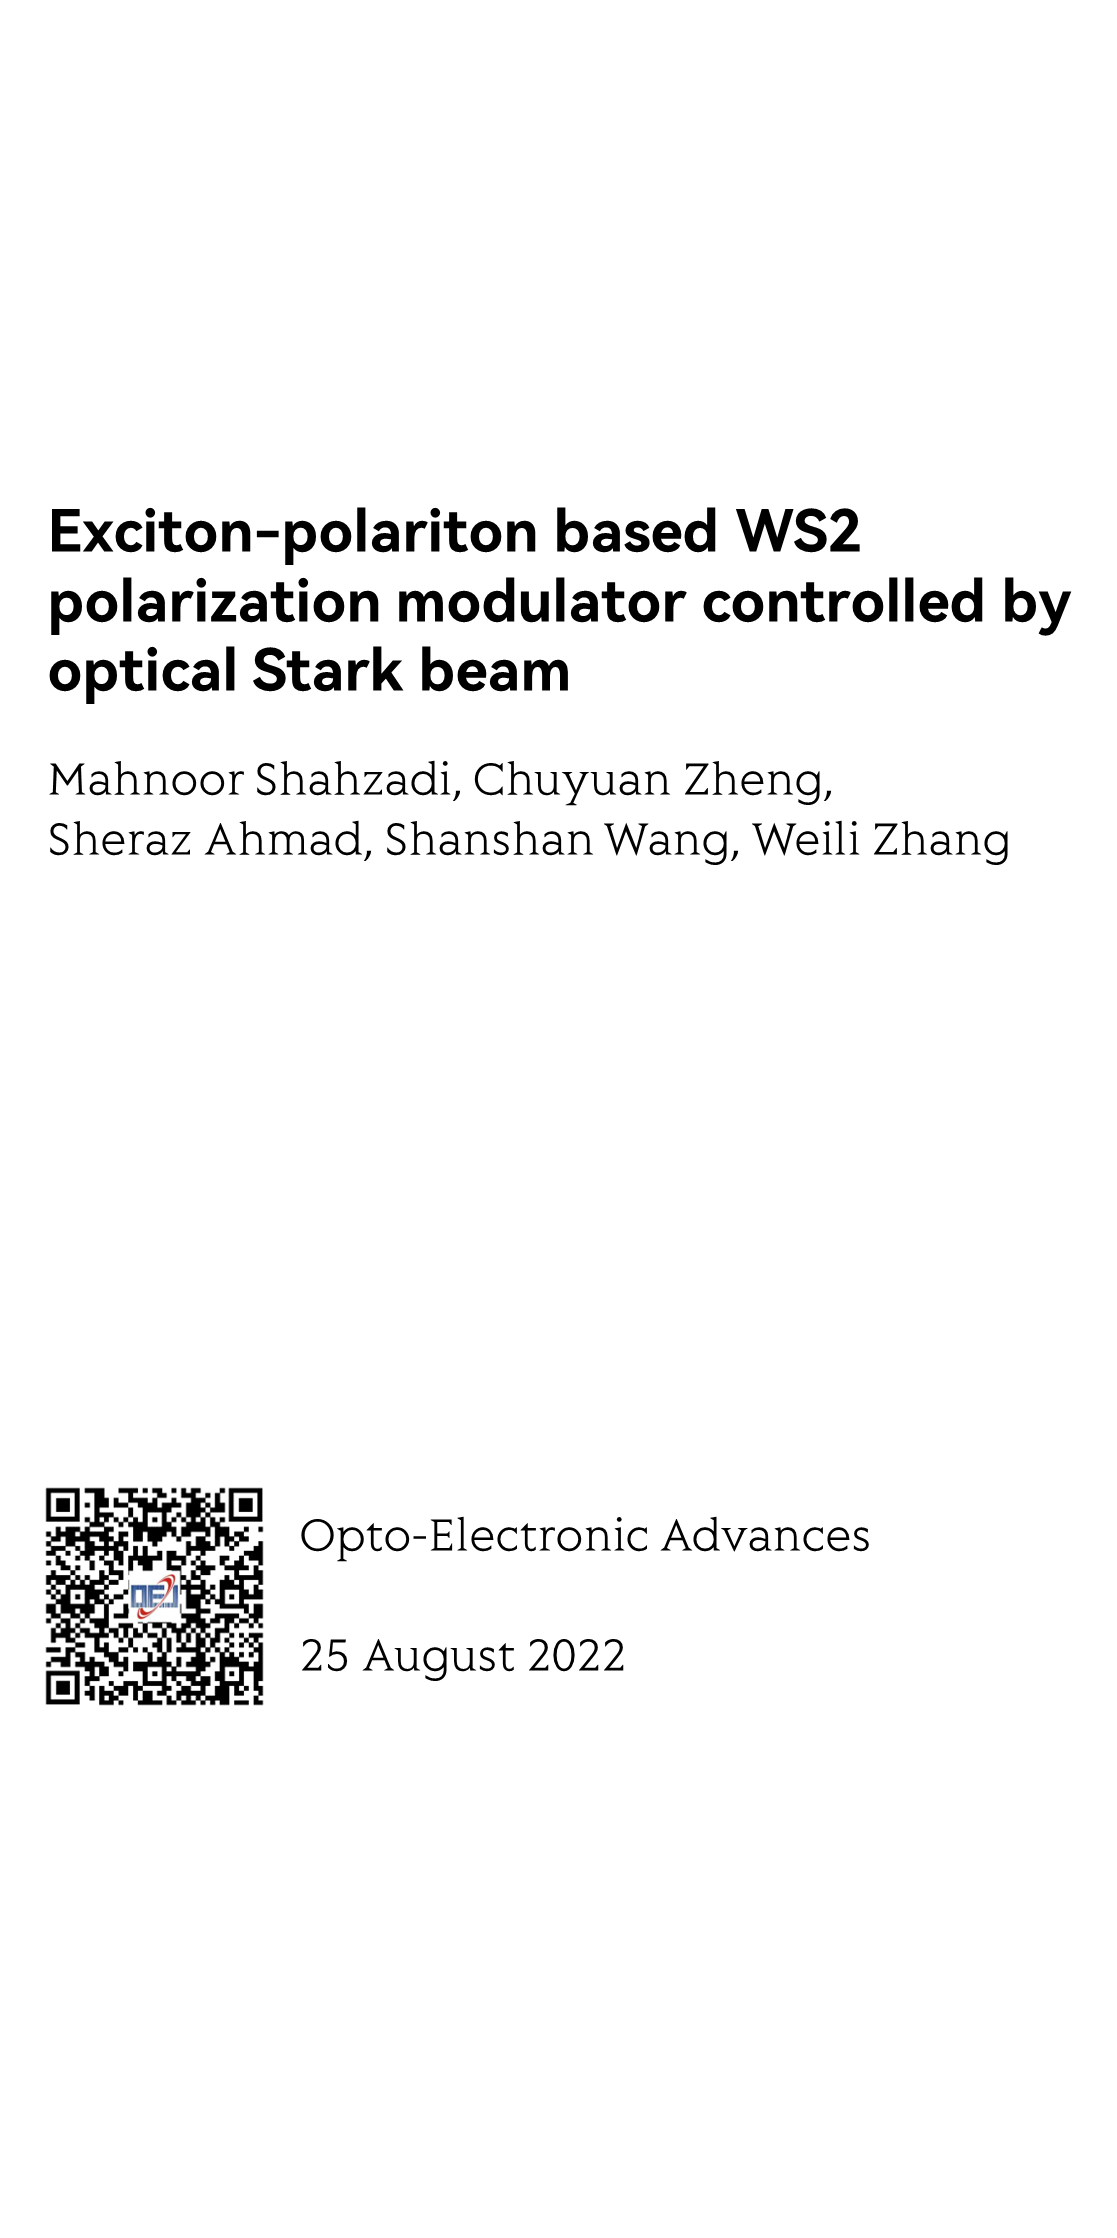 Exciton-polariton based WS2 polarization modulator controlled by optical Stark beam_1